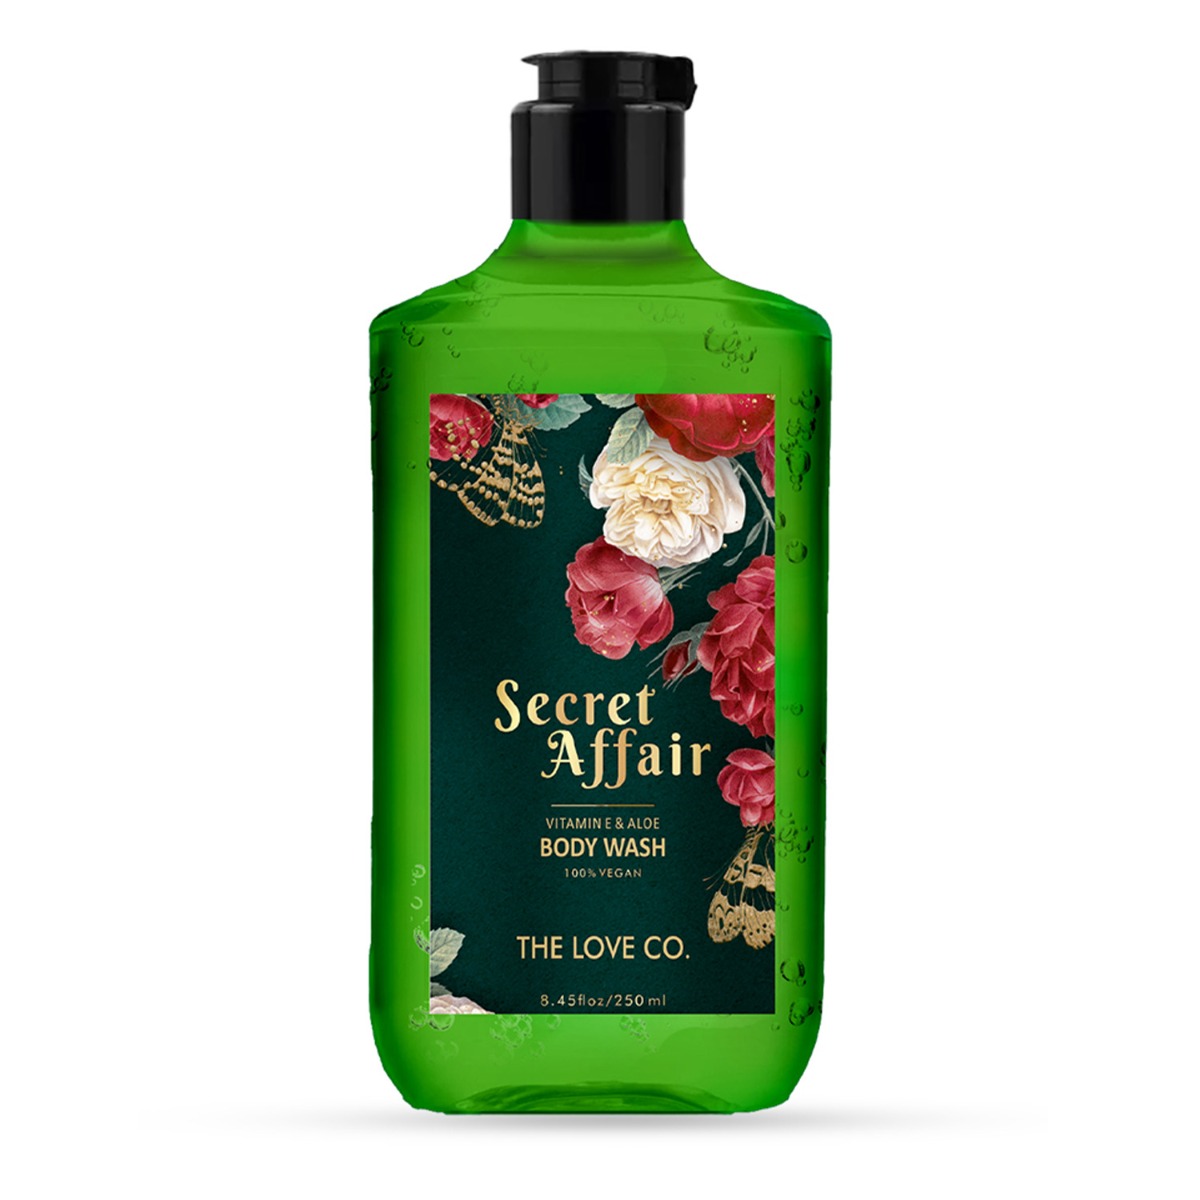 The Love Co. Secret Affair Body Wash, 250ml